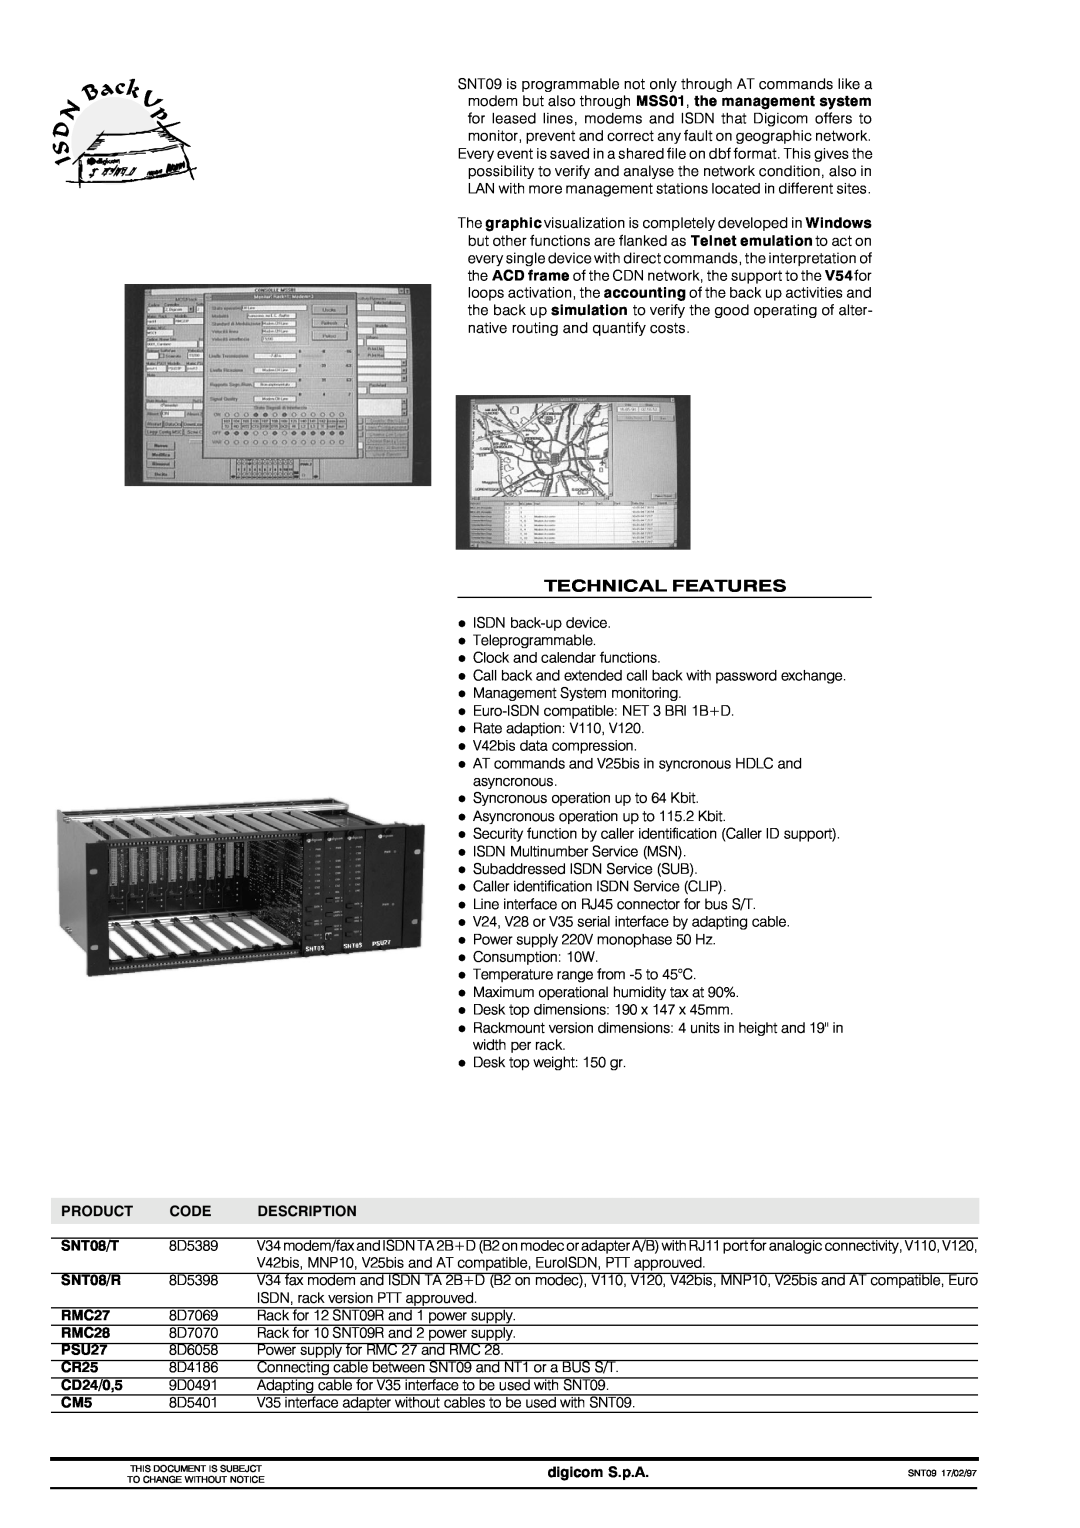 Digicom SNT09 manual Technical Features 